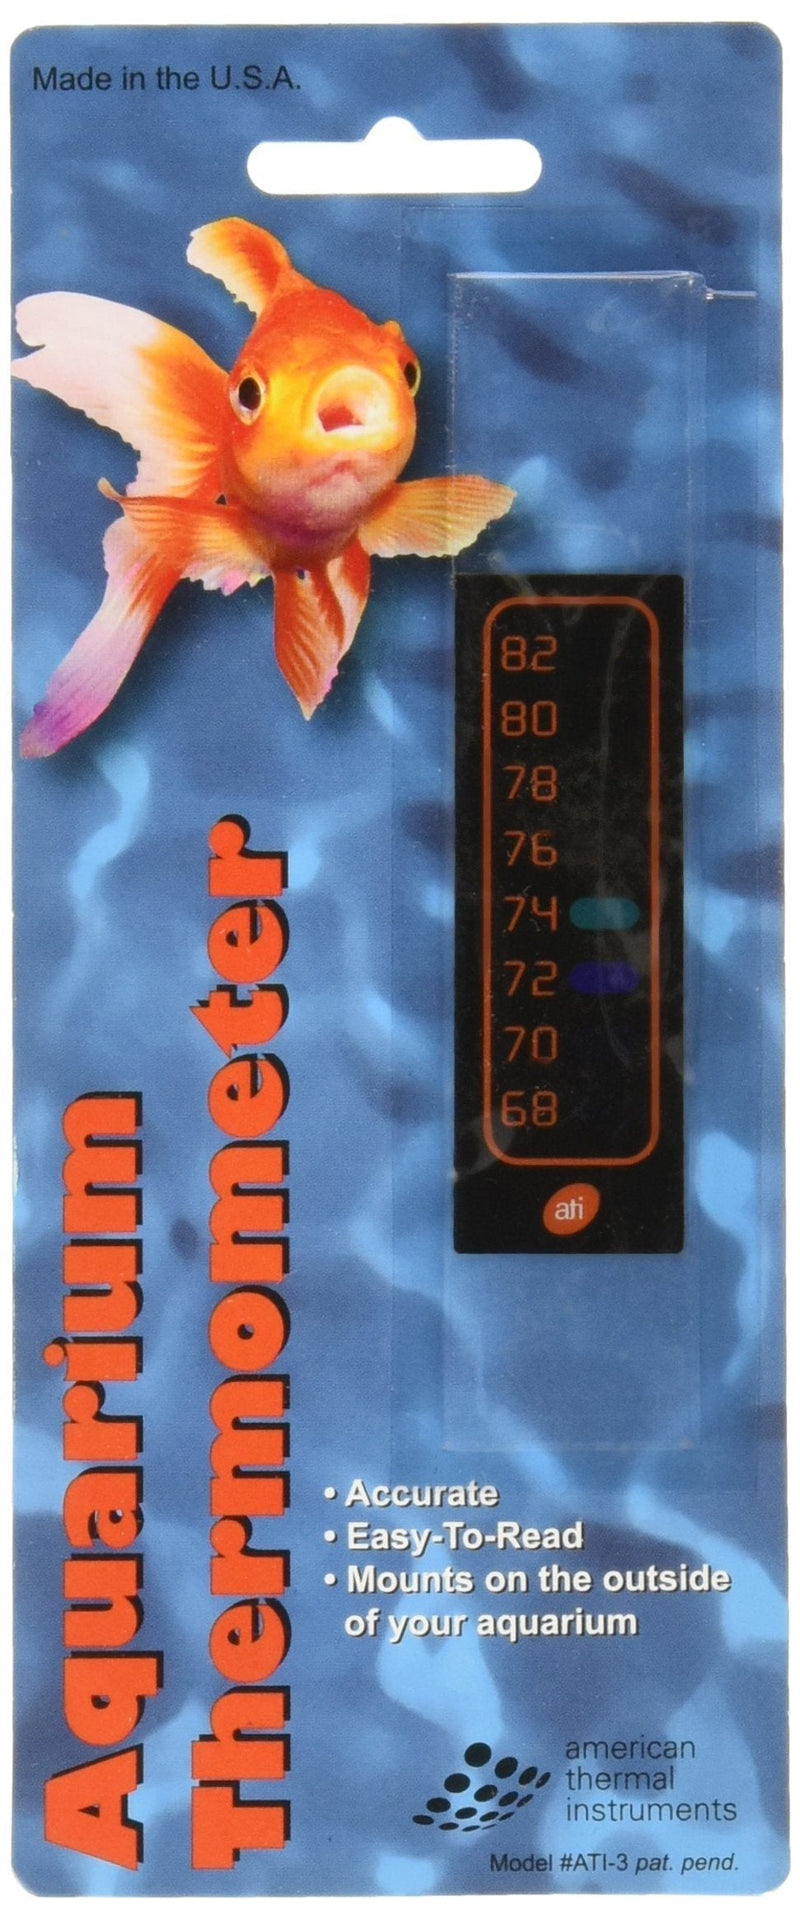 [Australia] - Amer Thermal Instruments Liquid Crystal Vertical Aquarium Thermometer, Small 